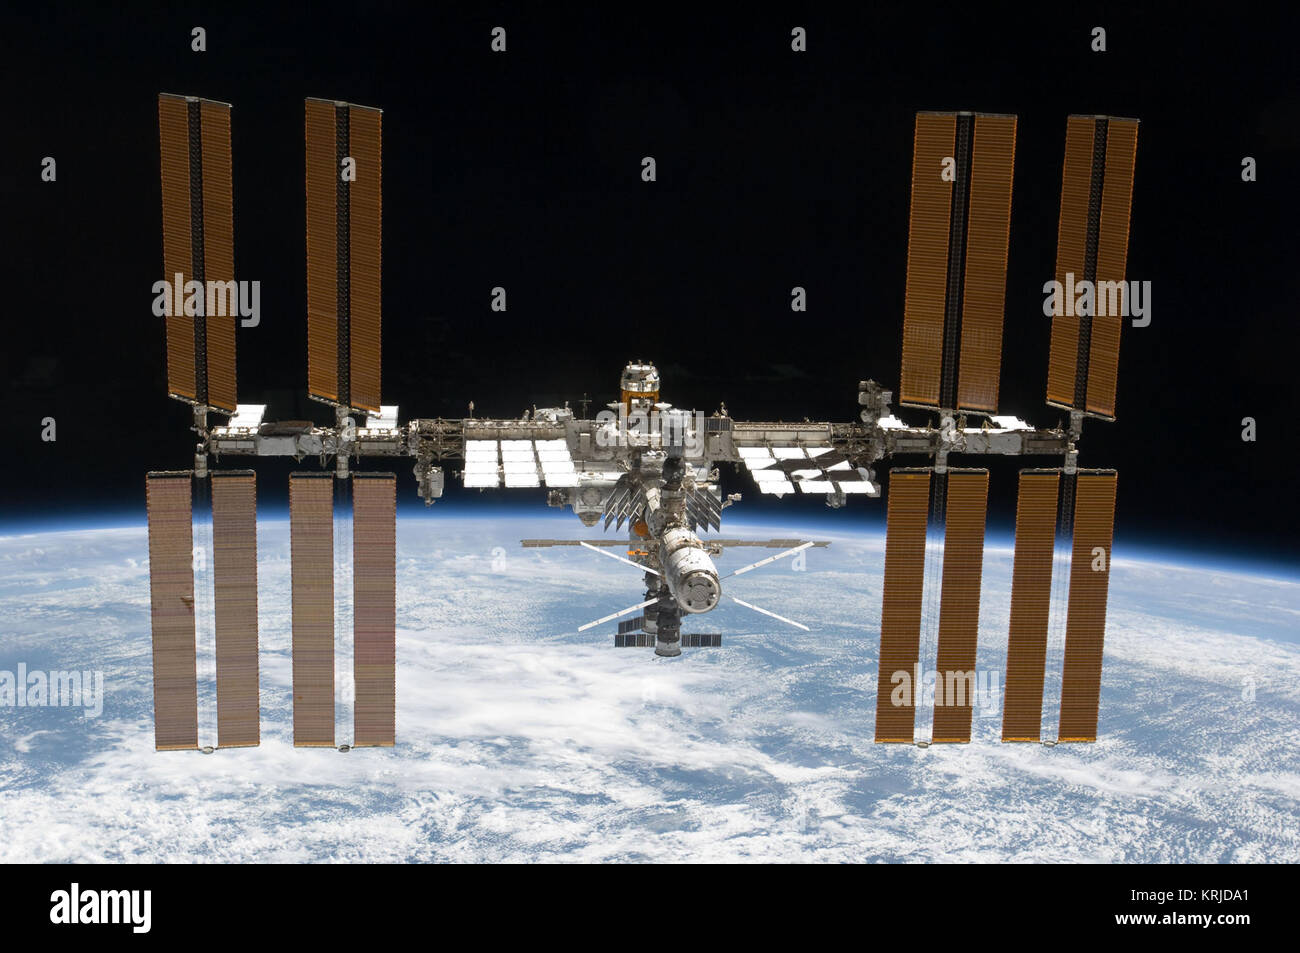 Sts 133 International Space Station After Undocking 9 Stock Photo Alamy